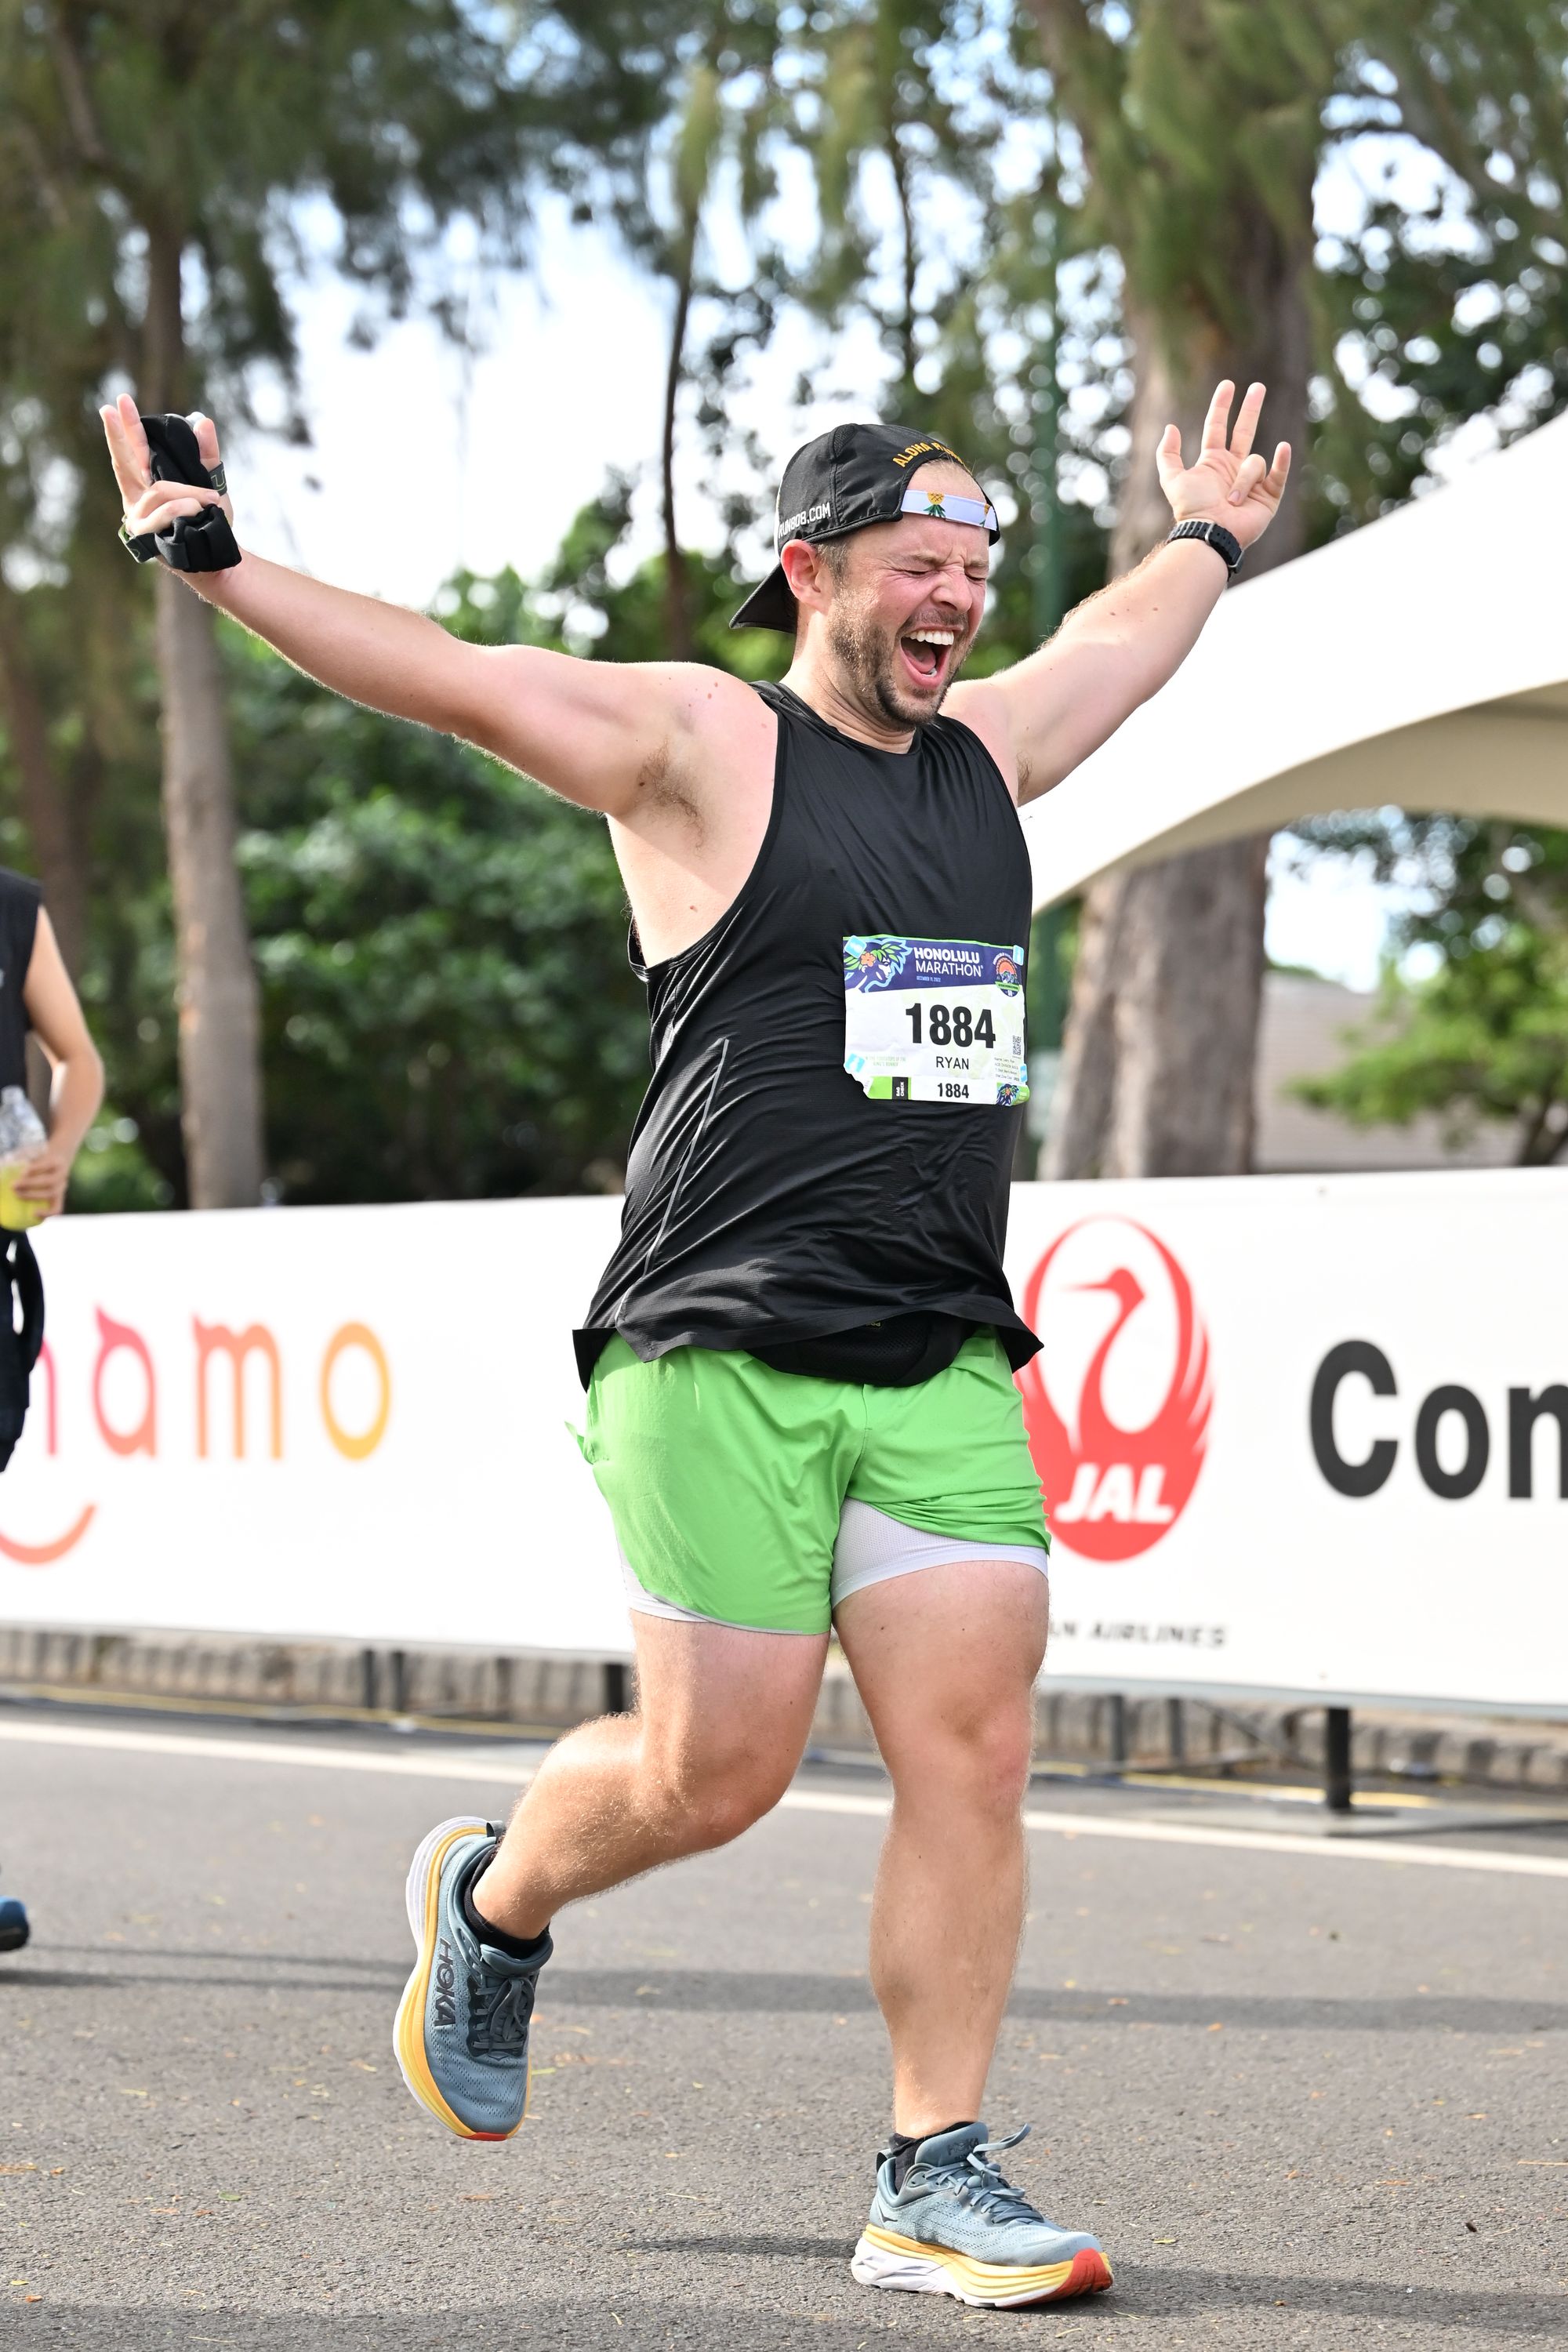 Honolulu Marathon pt. 4 - RACE DAY